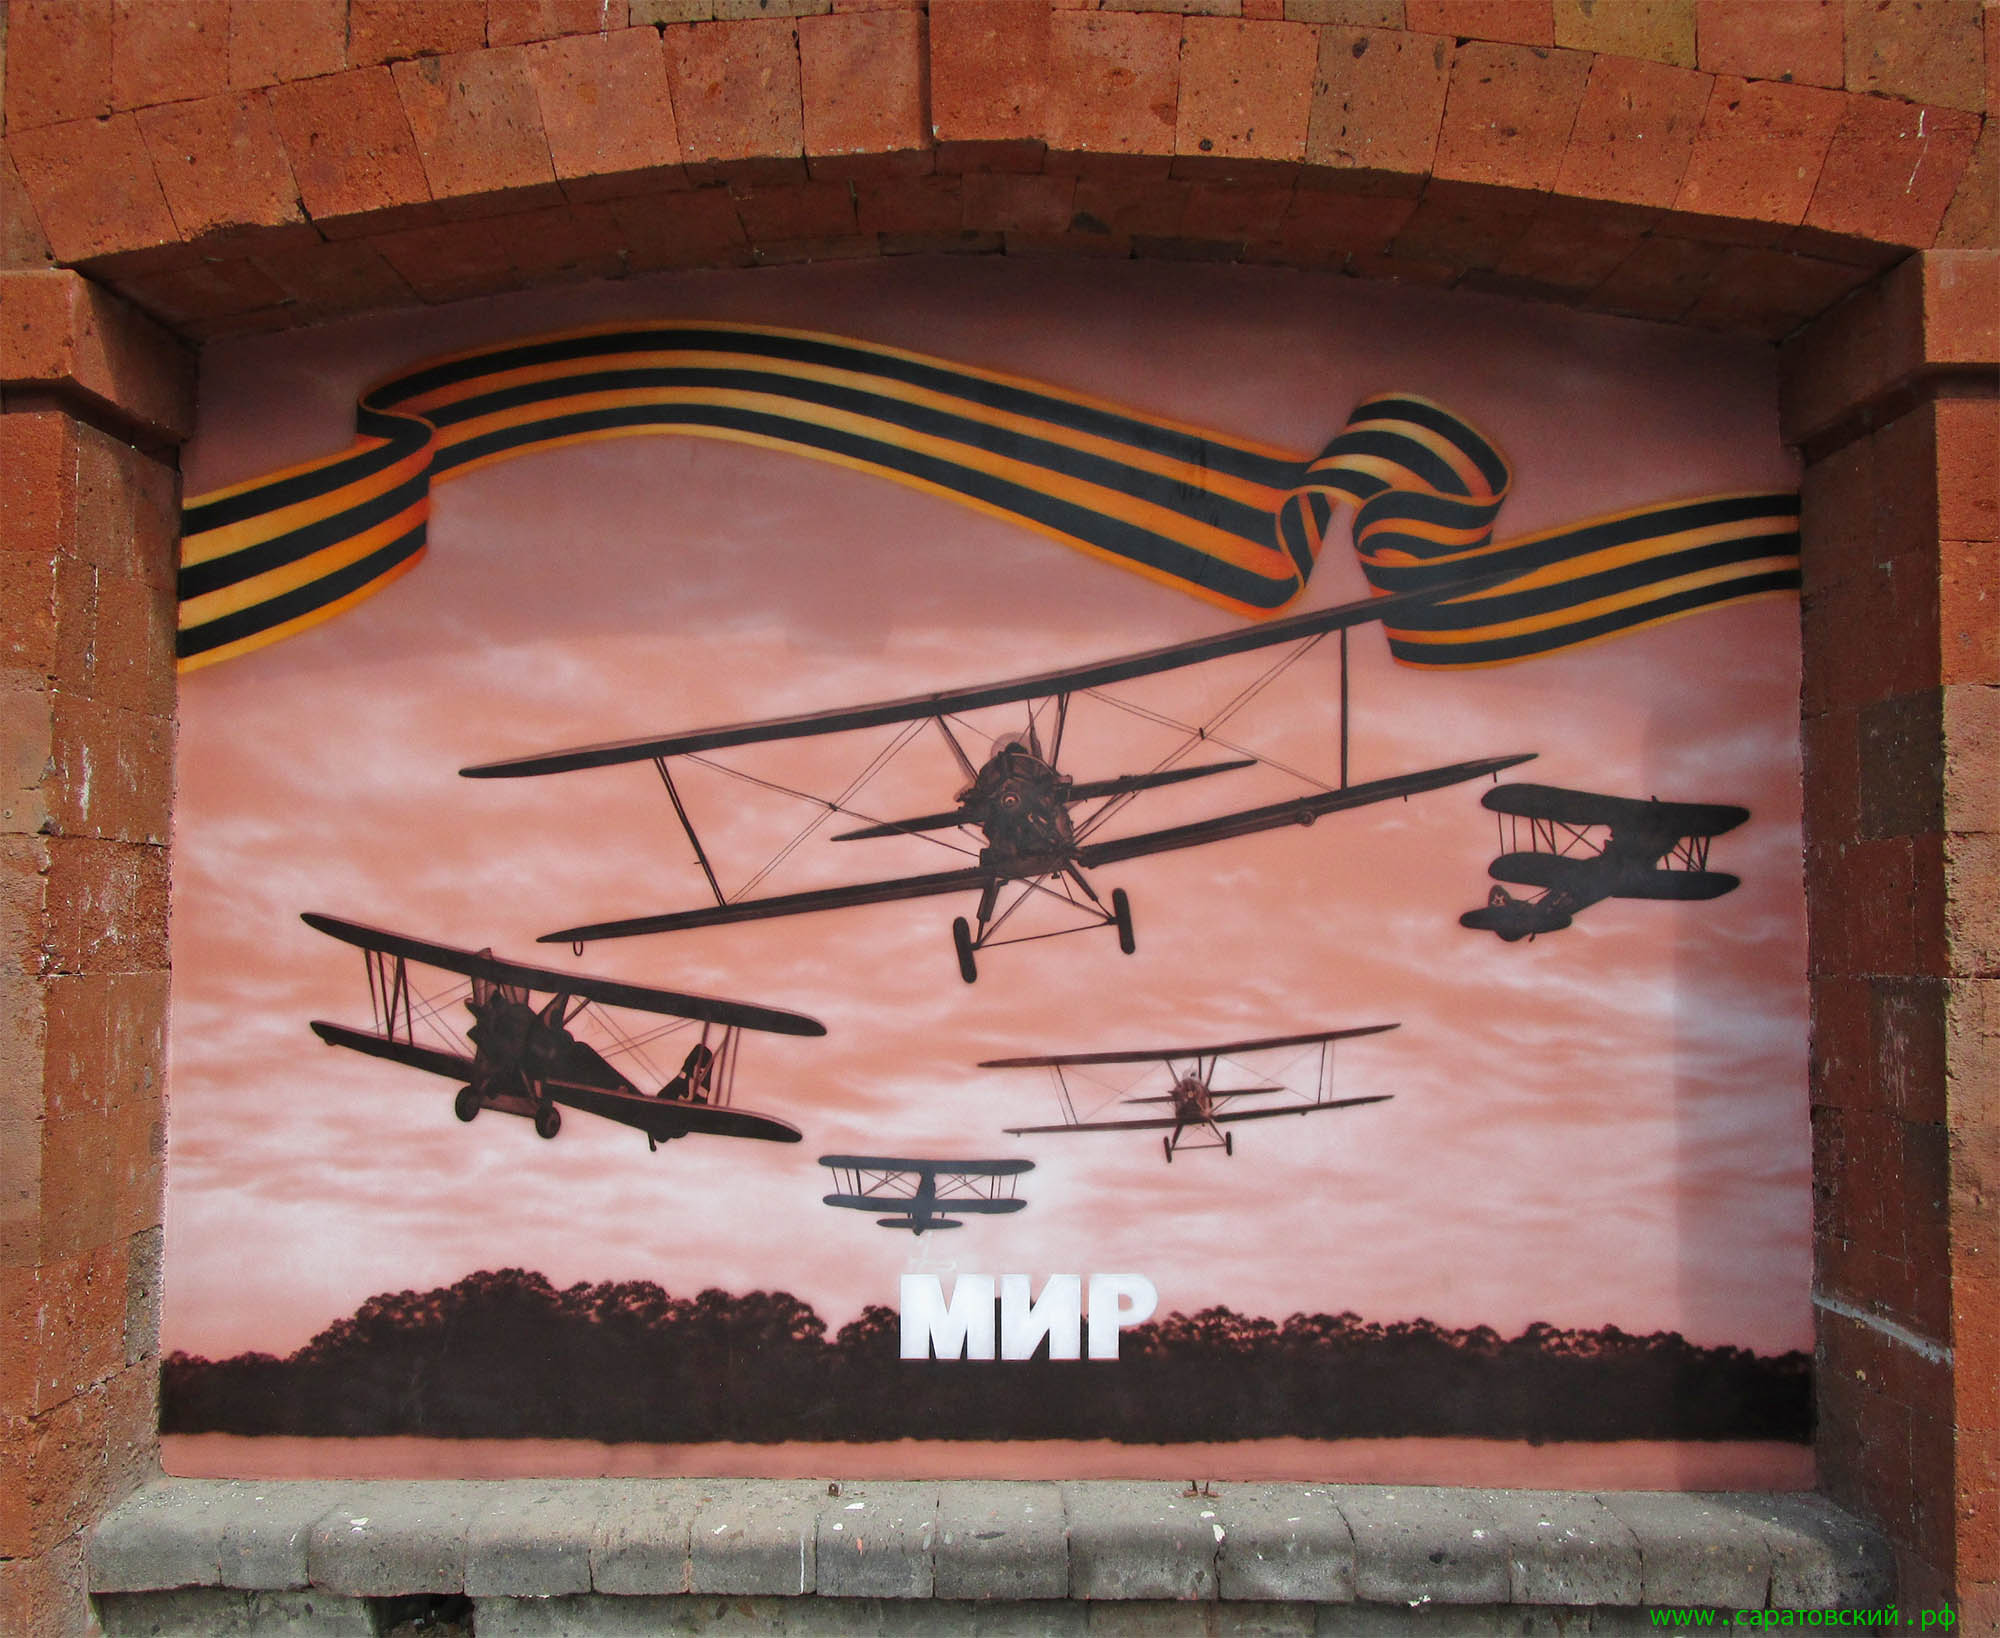 Saratov embankment graffiti: combat planes in the peaceful sky